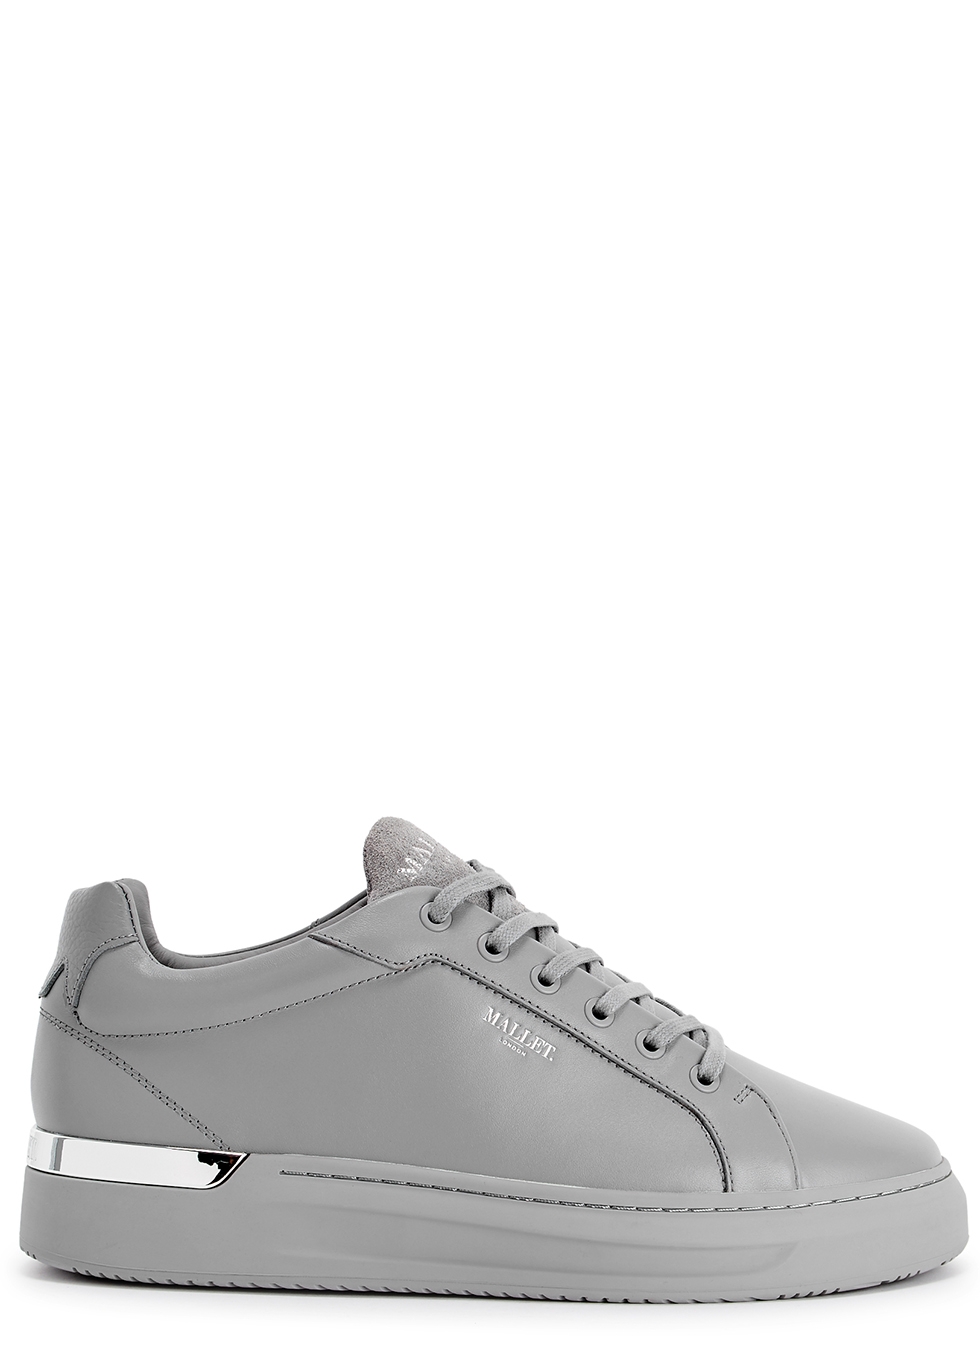 Mallet Grftr Grey Leather Sneakers 